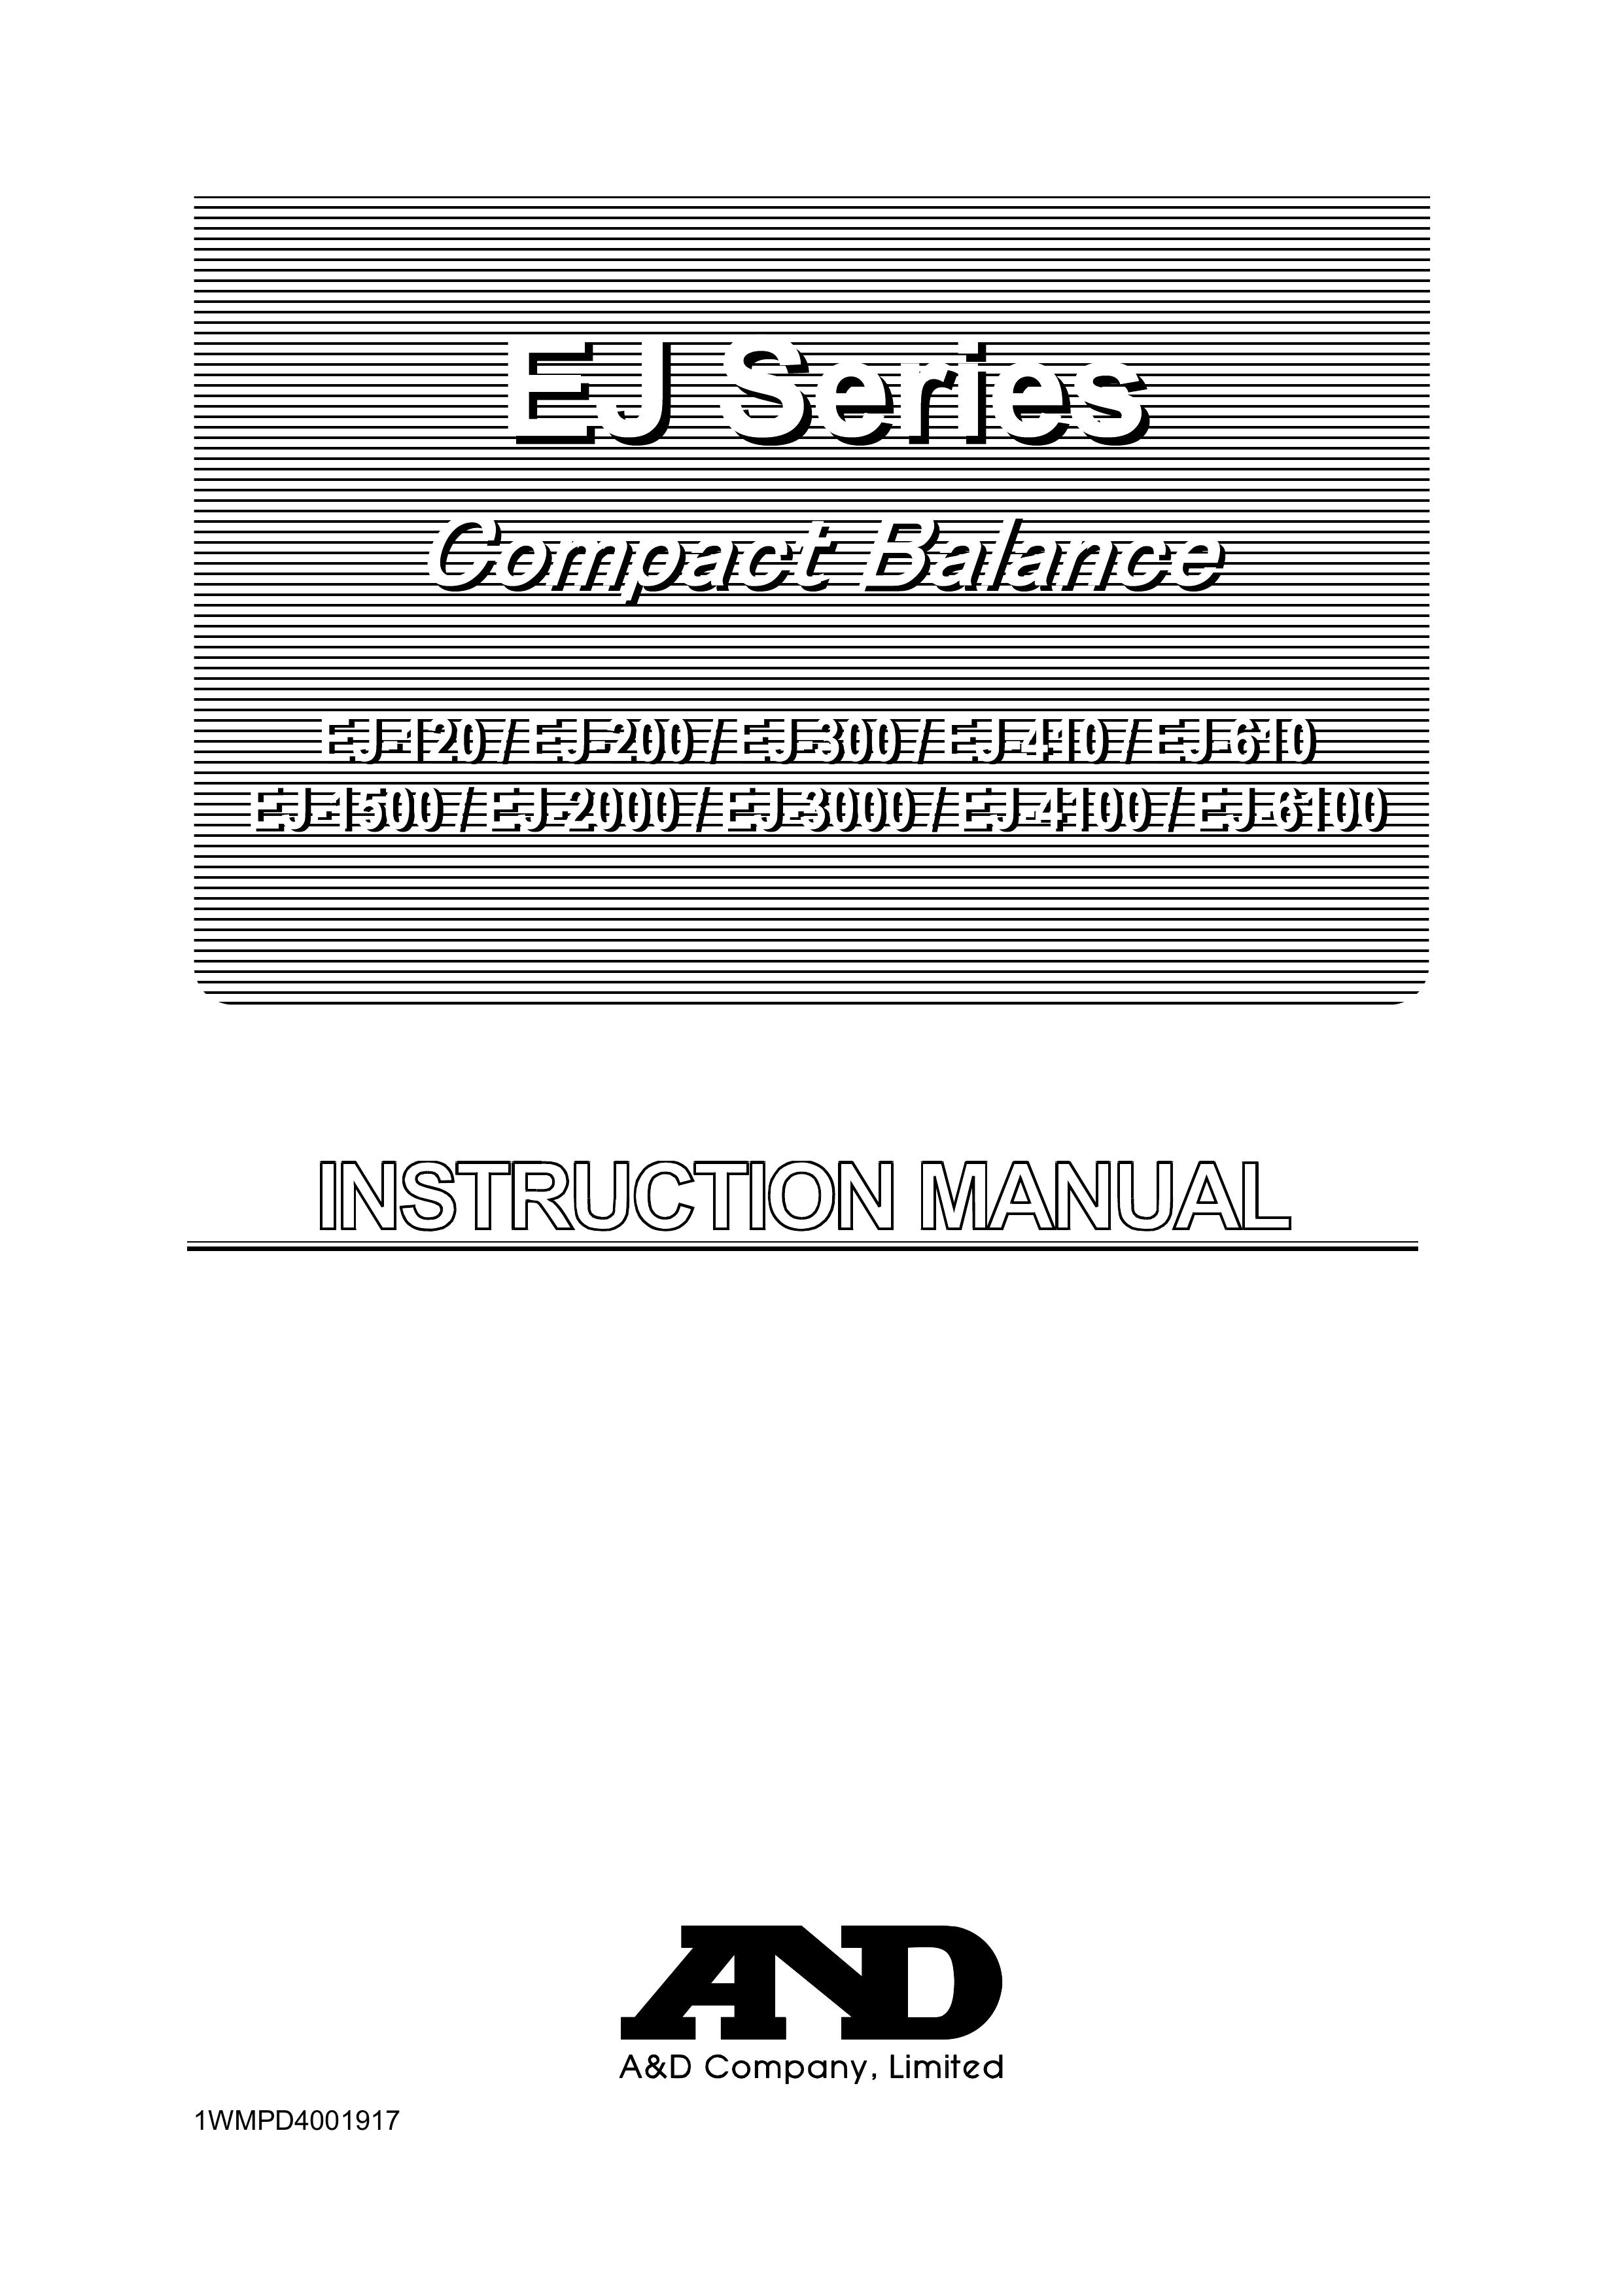 A&D EJ-4100 Scale User Manual